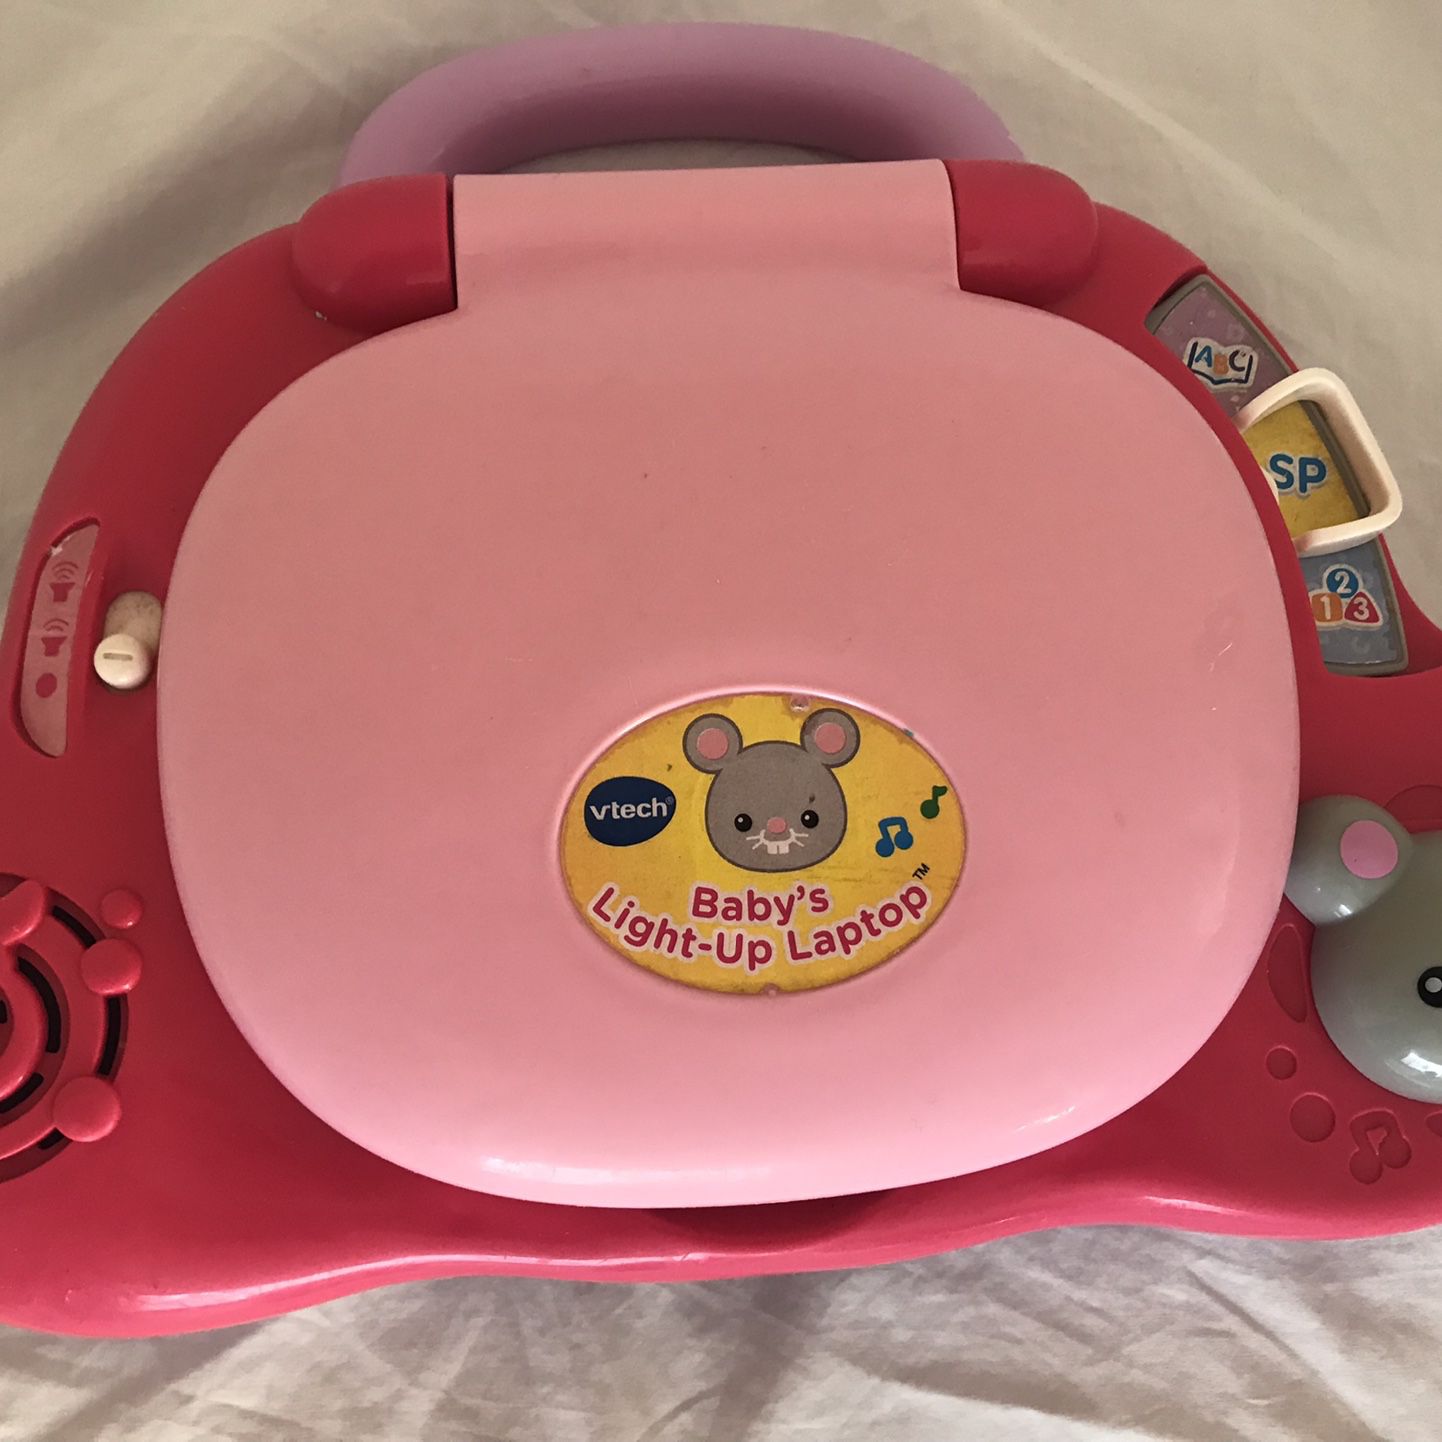 Vtech Baby's Laptop - Pink